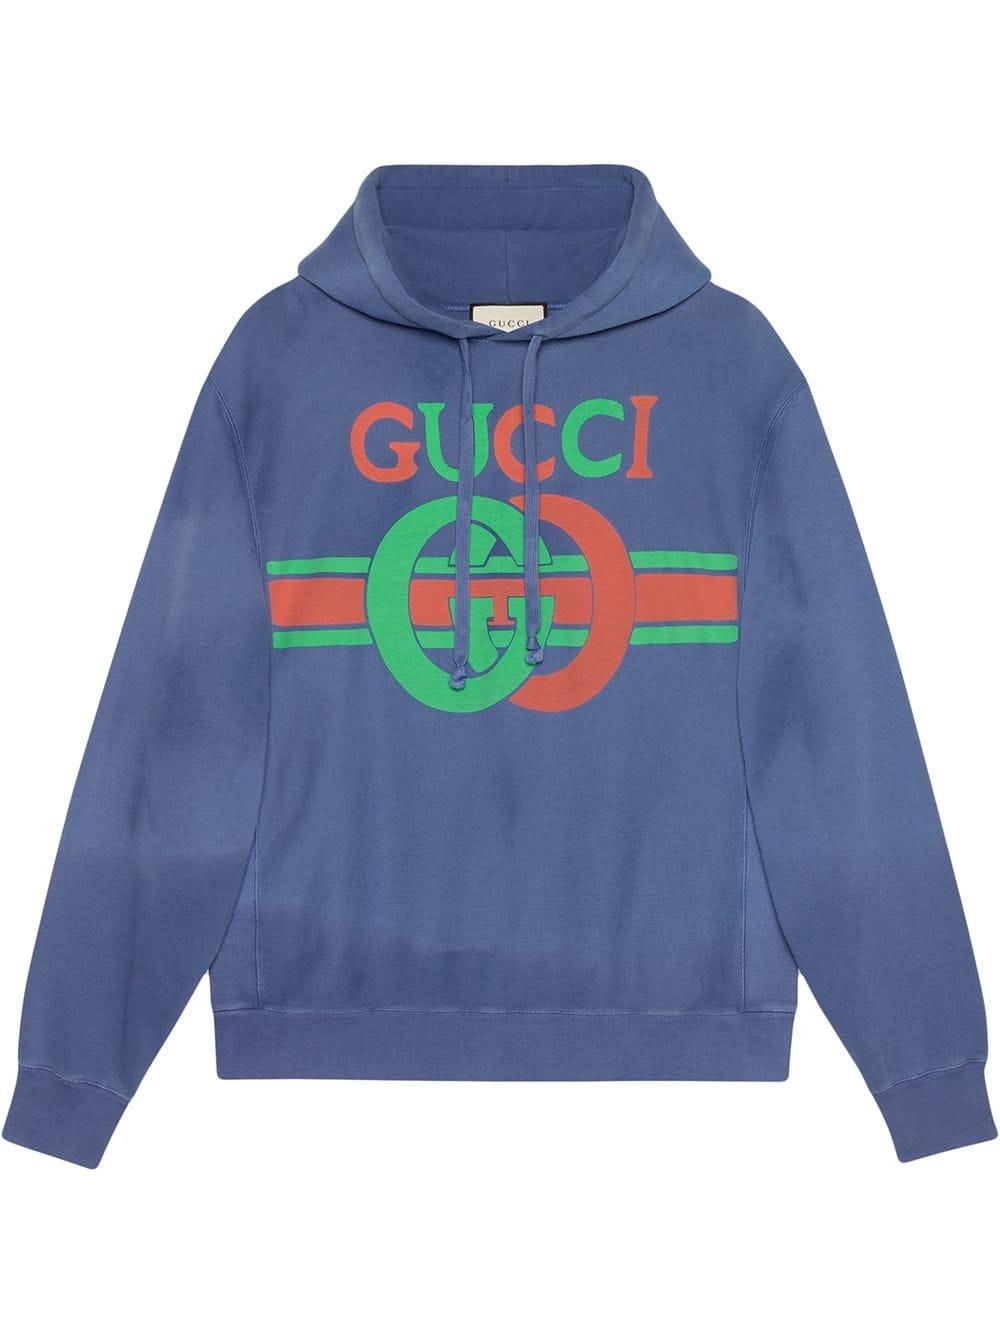 Gucci Sweatshirt With Interlocking G Print in Blue for Men | Lyst